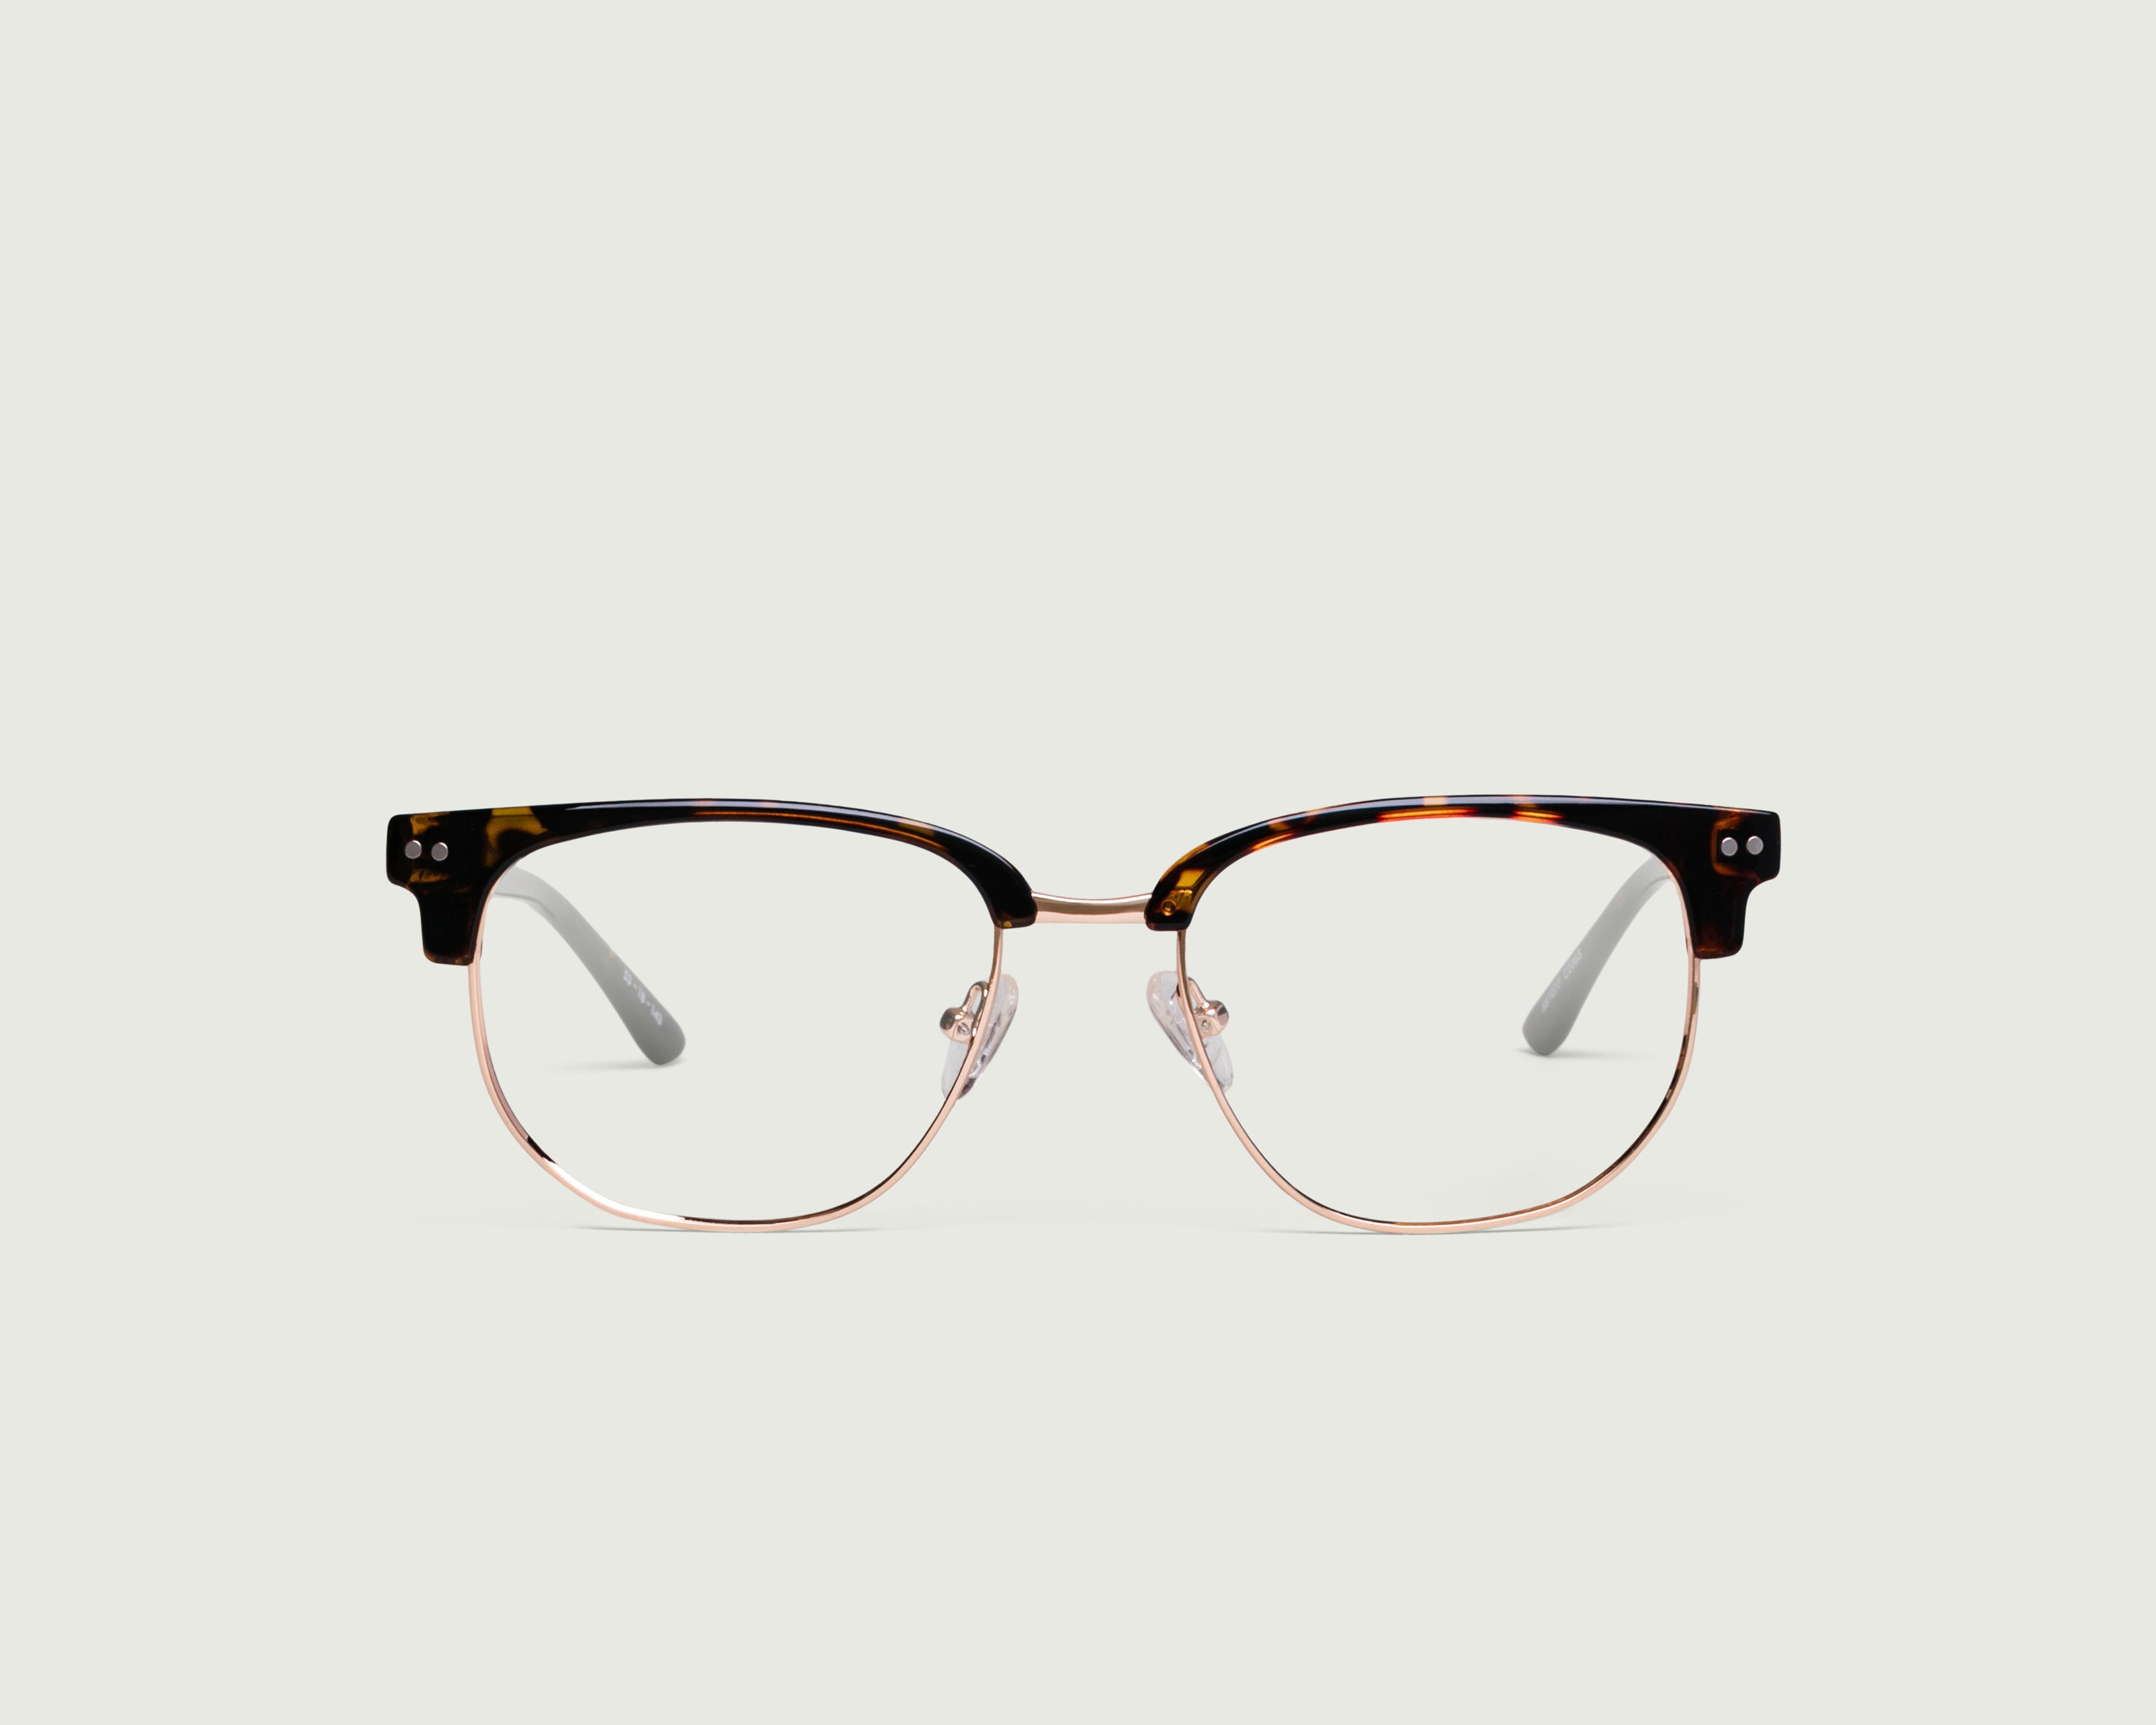 Dark Tort::Madison Eyeglasses browline tort plastic front